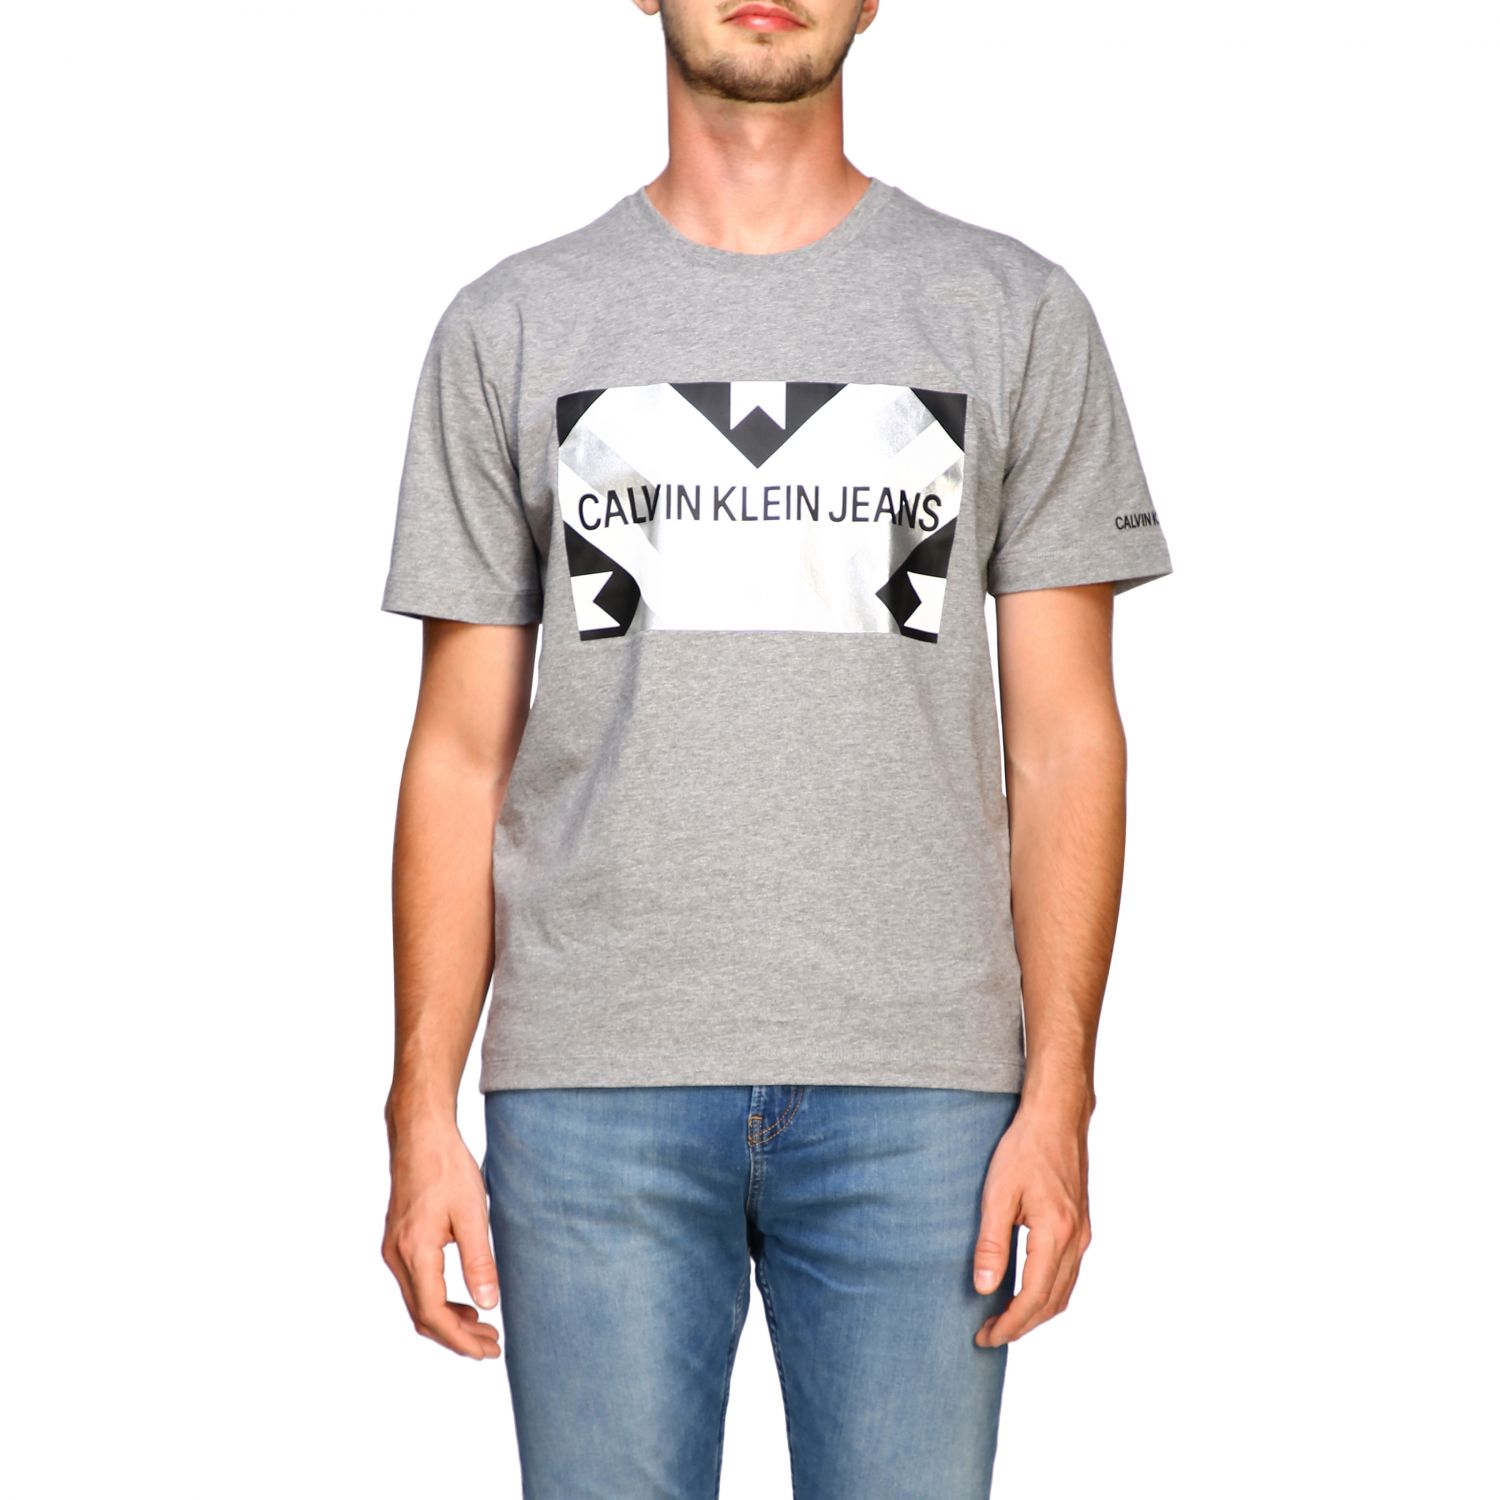 Calvin Klein Jeans Tee Shirt Flash Sales, 58% OFF | www 